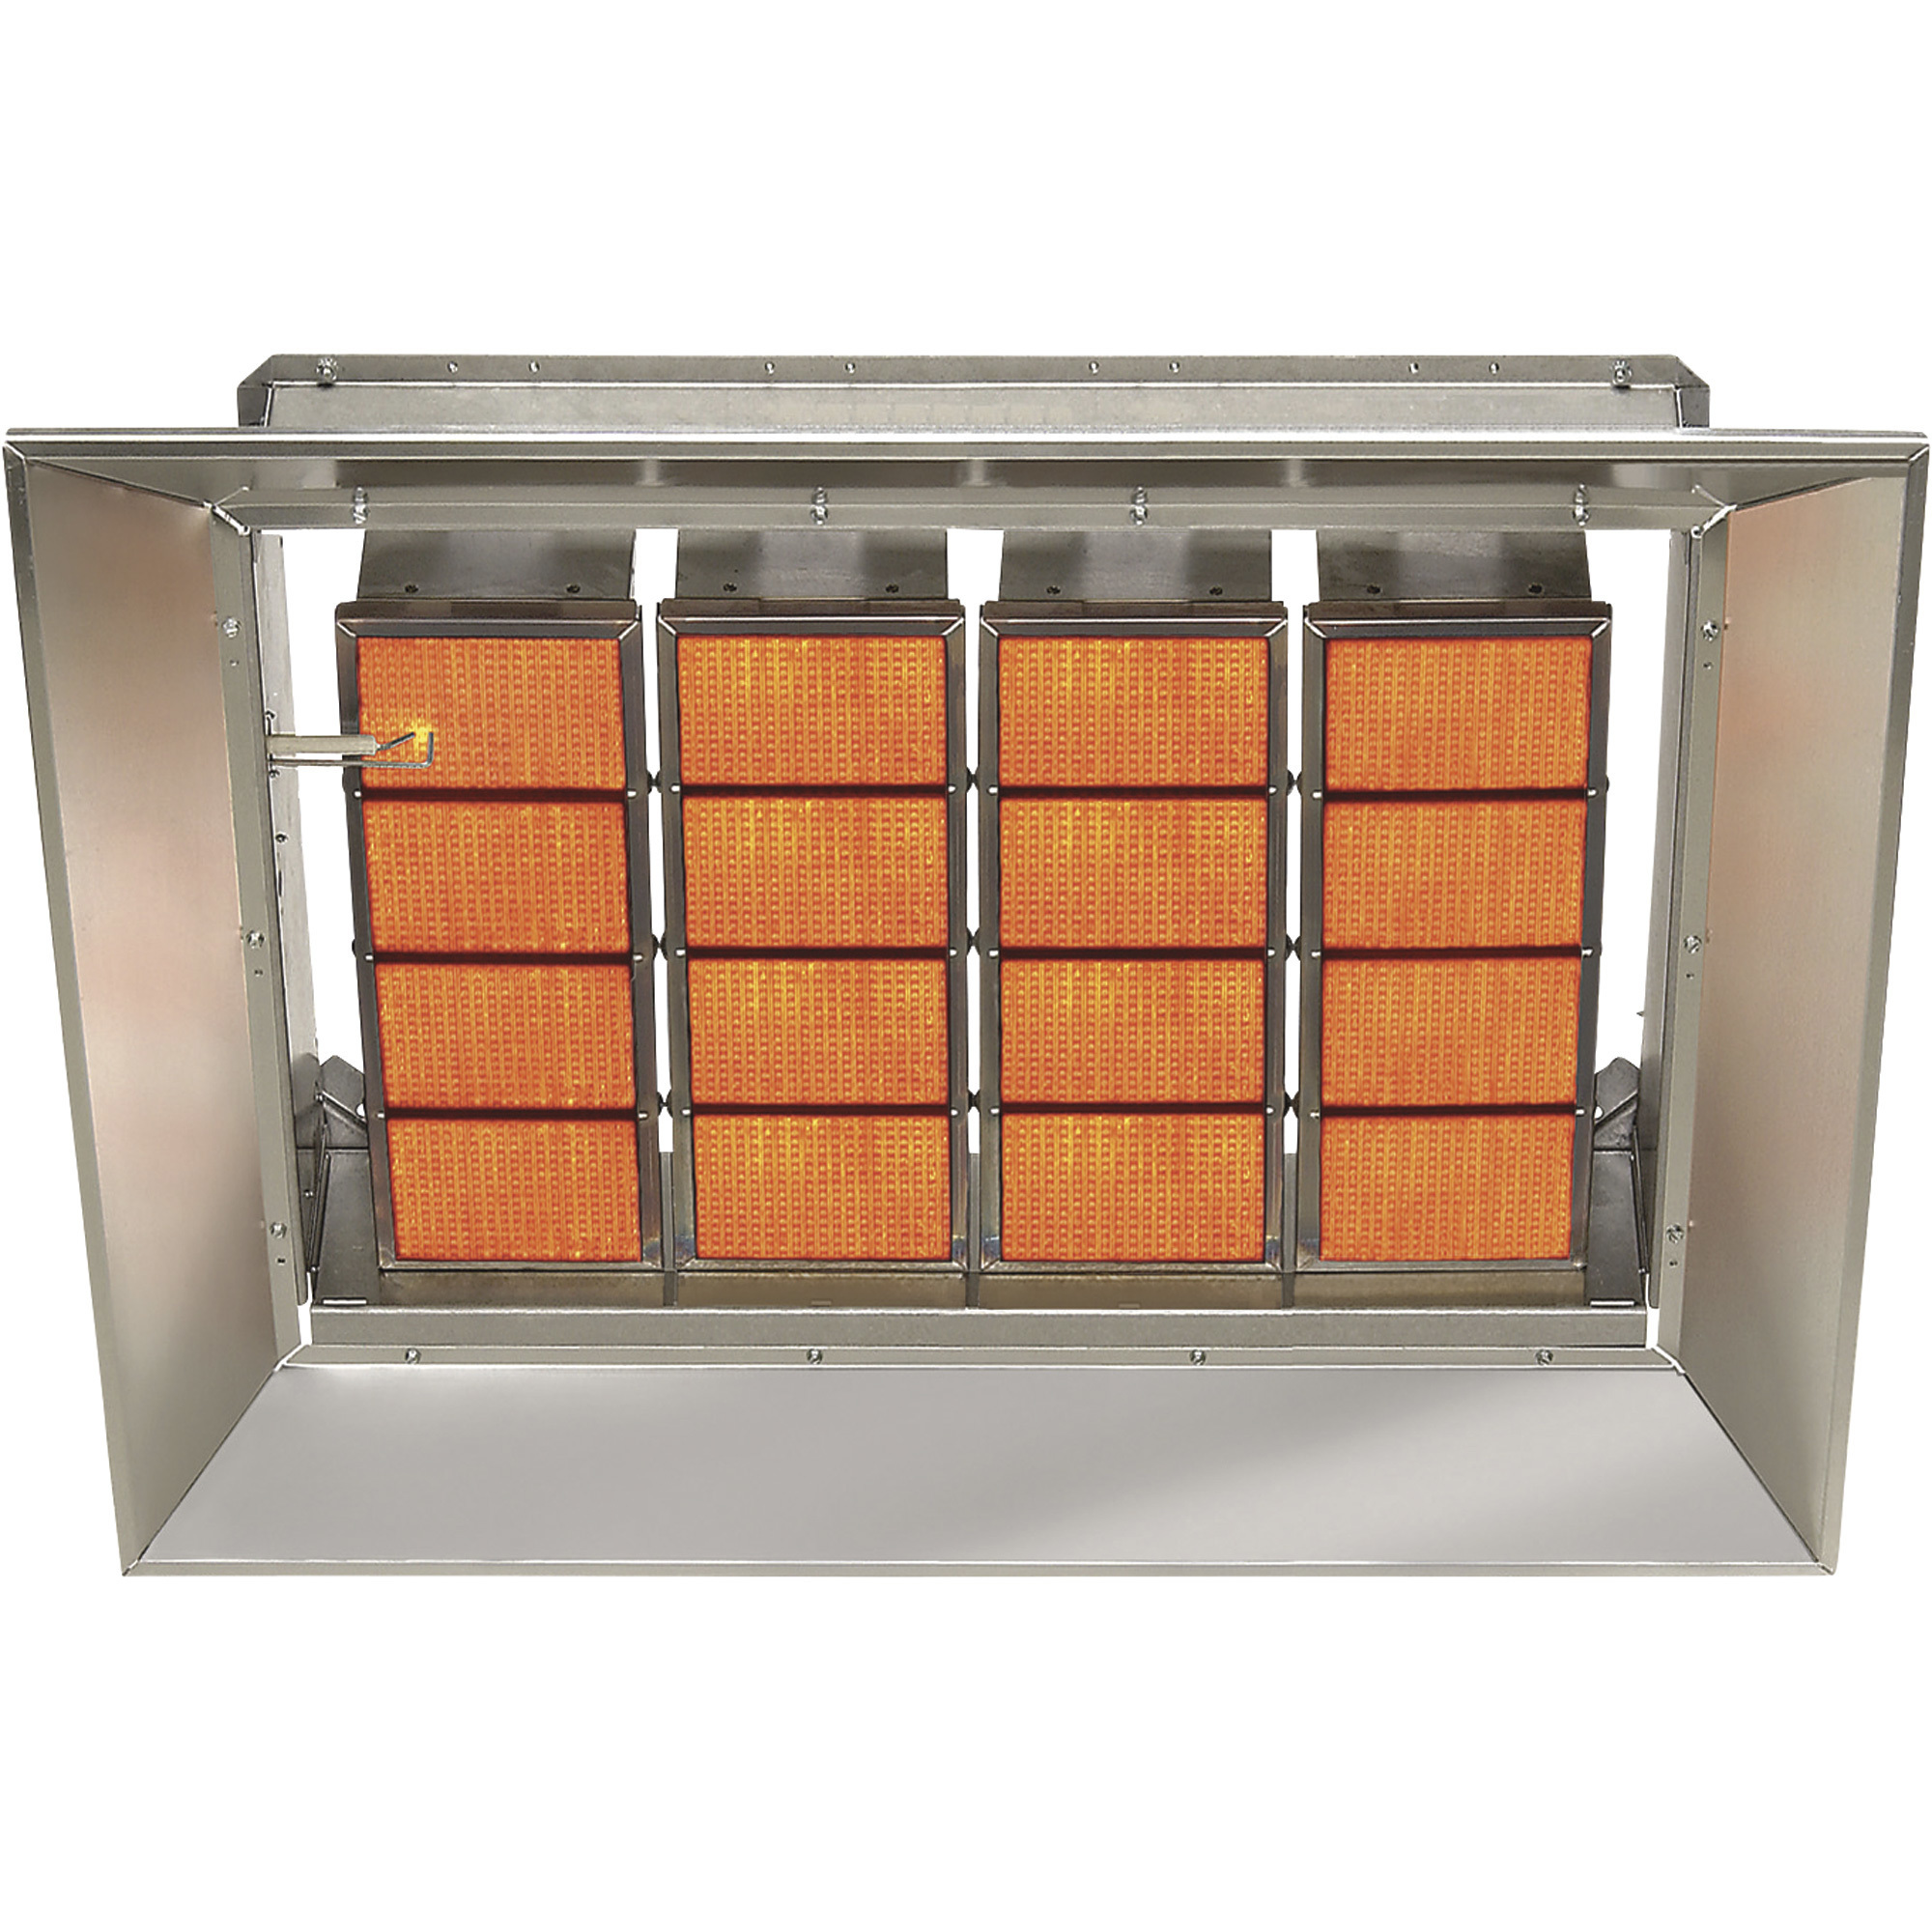 SunStar Heating Products Infrared Ceramic Heater, Natural Gas, 140,000 BTU, Model SG14-N